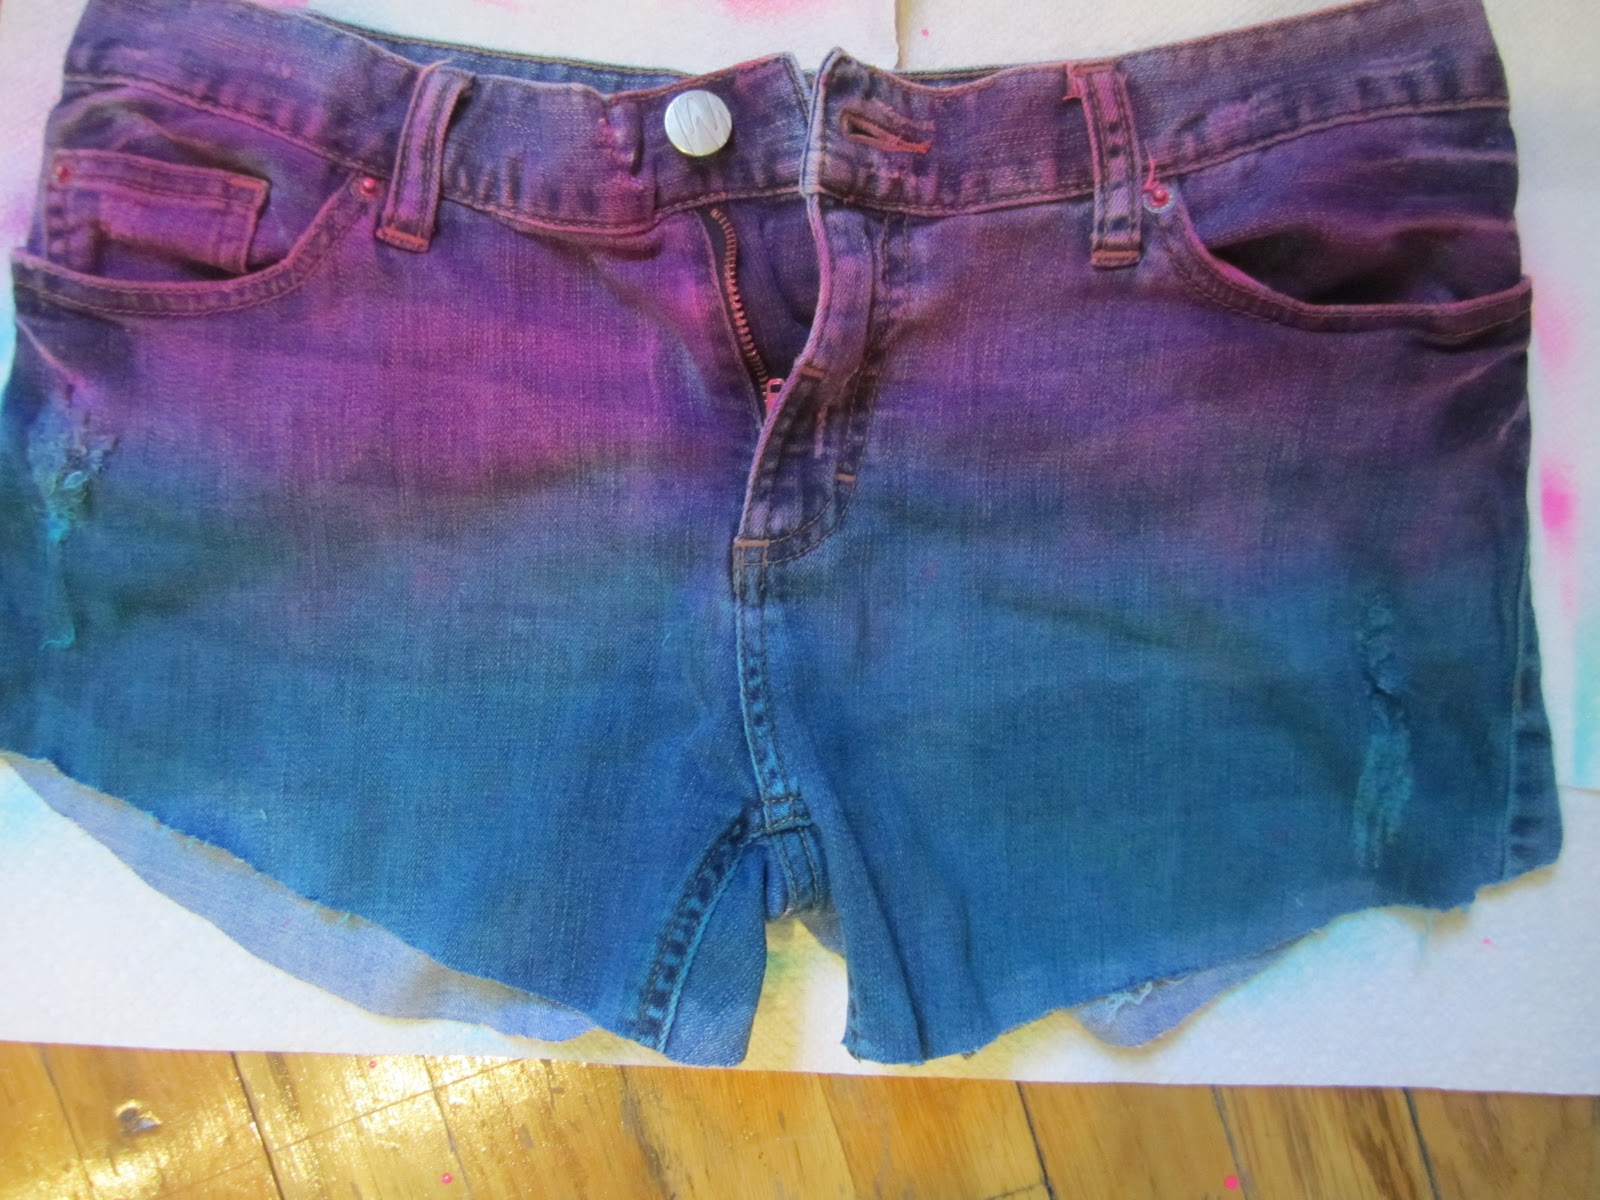 DIY: Tie Dye Shorts | Fashionista New York Girl